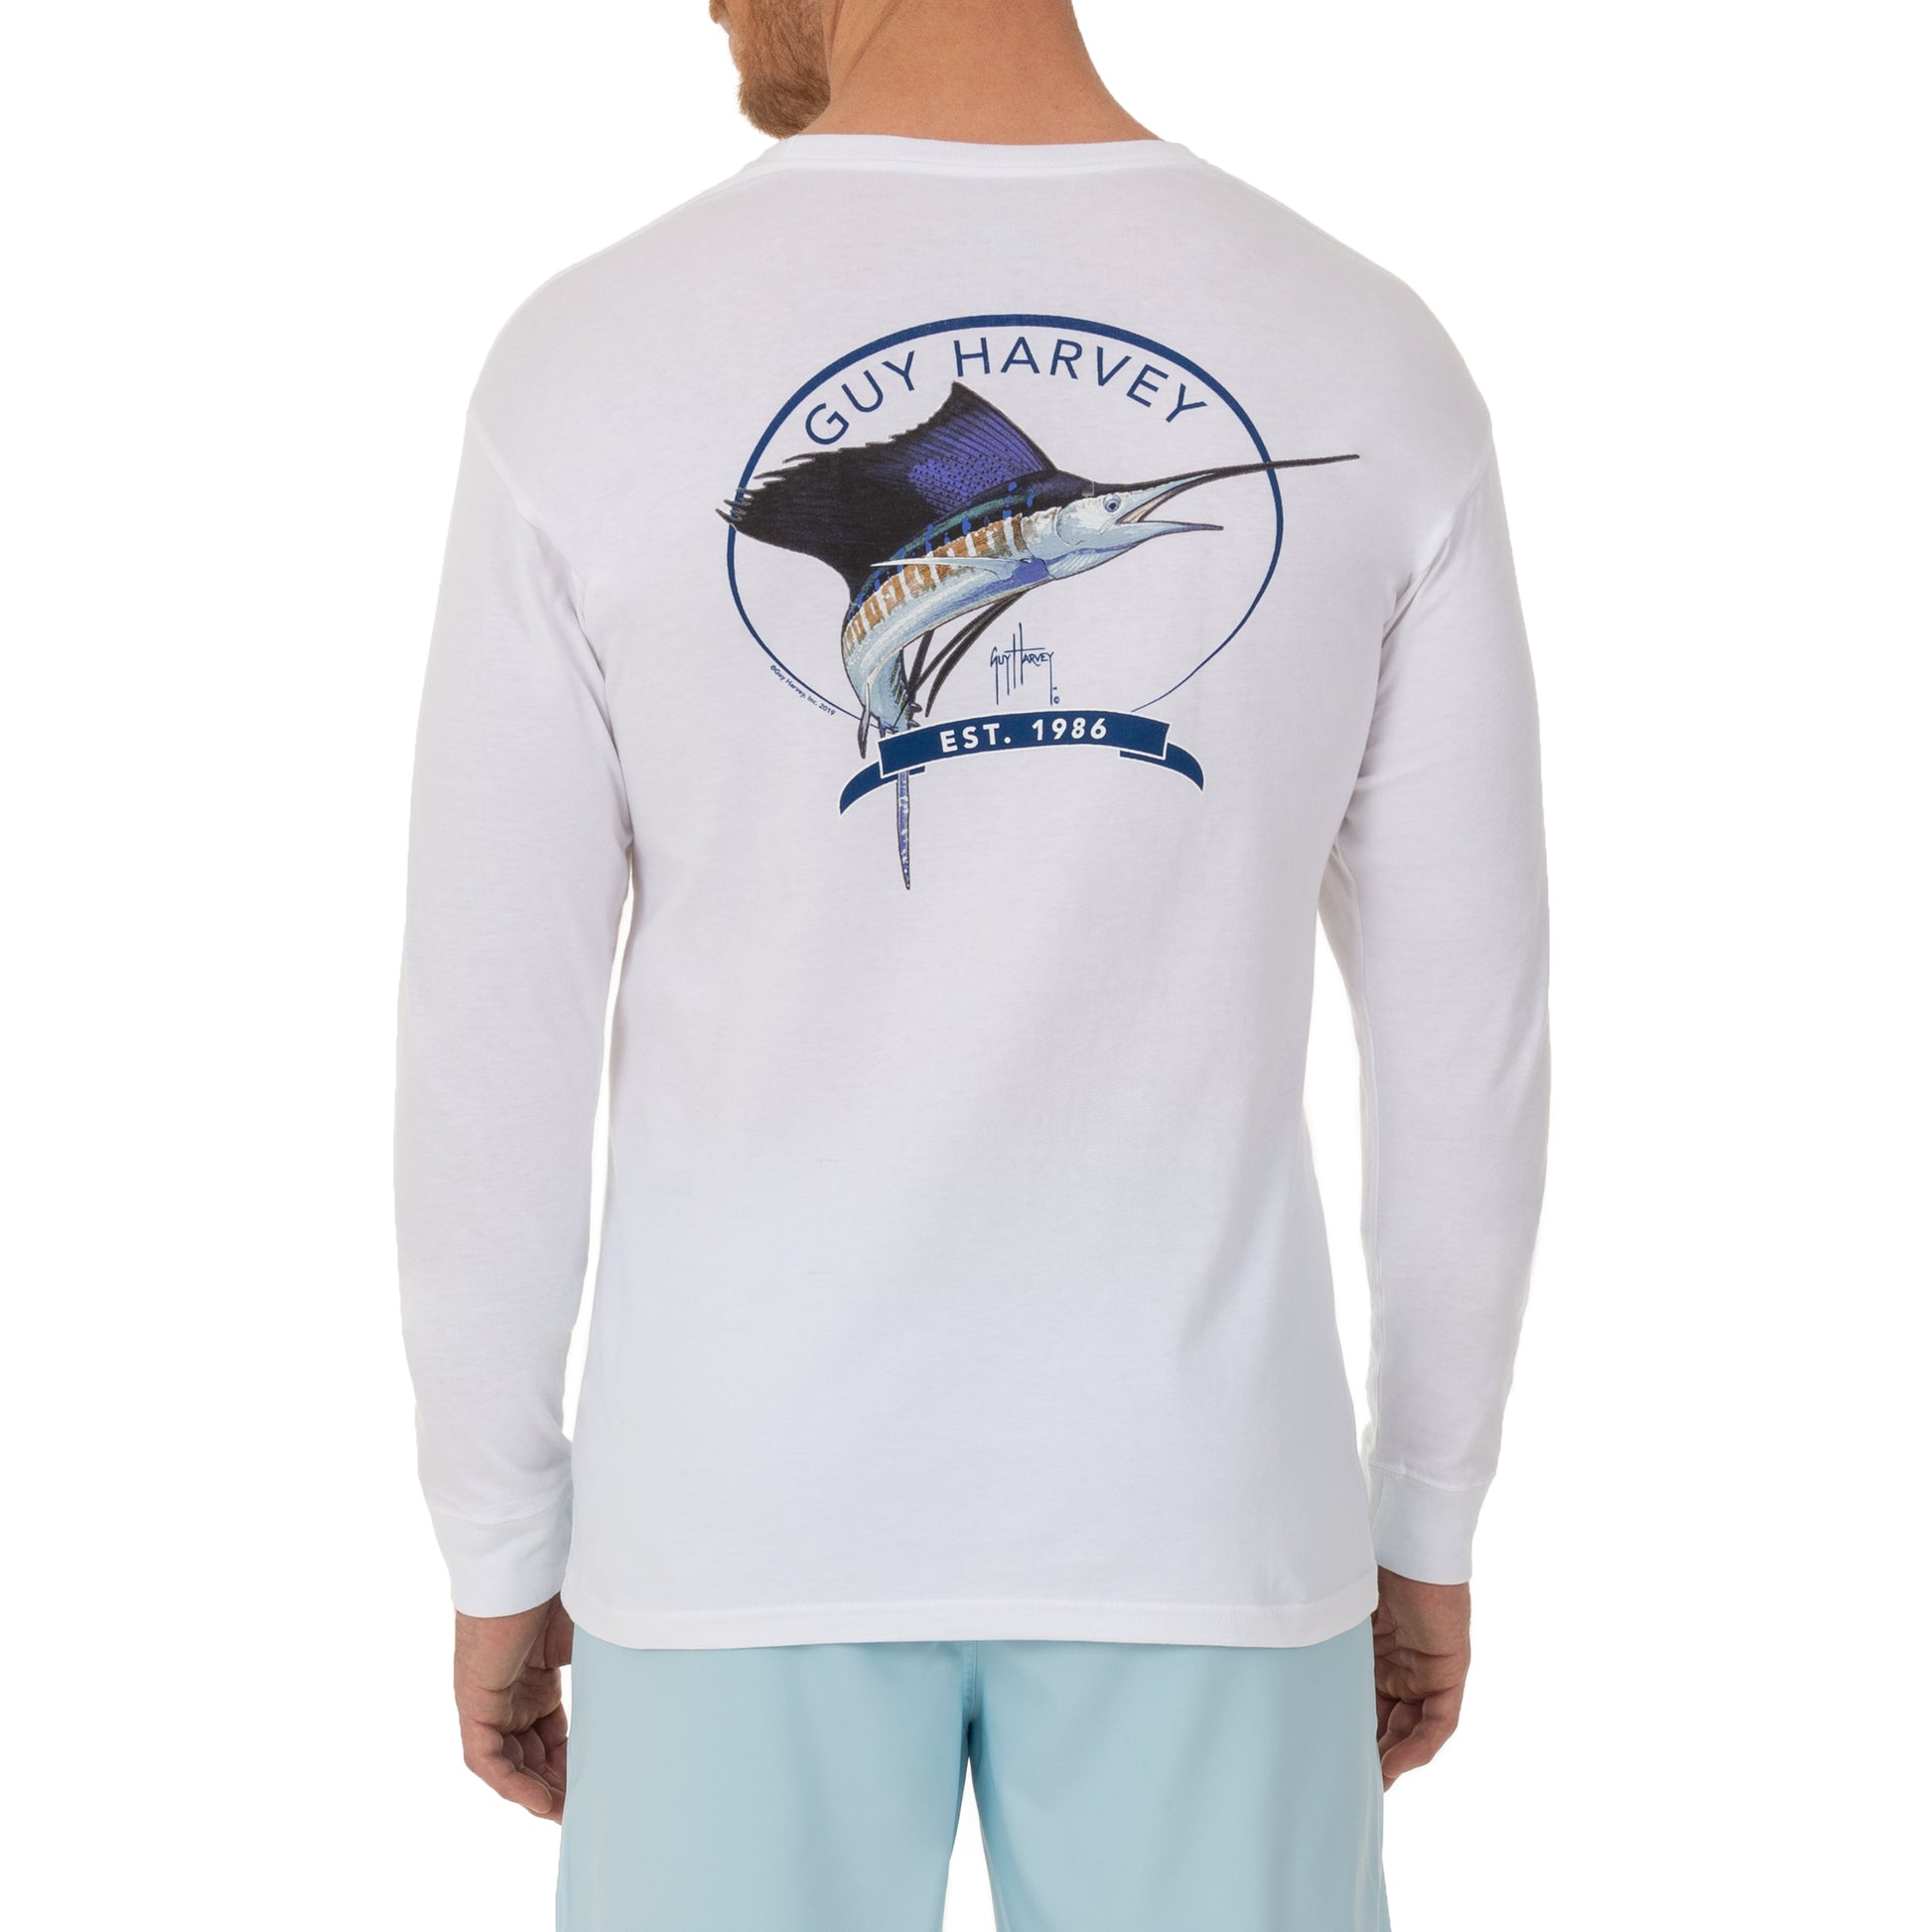 Guy Harvey Men's Long Sleeve Core Sailfish White T-Shirt View 1